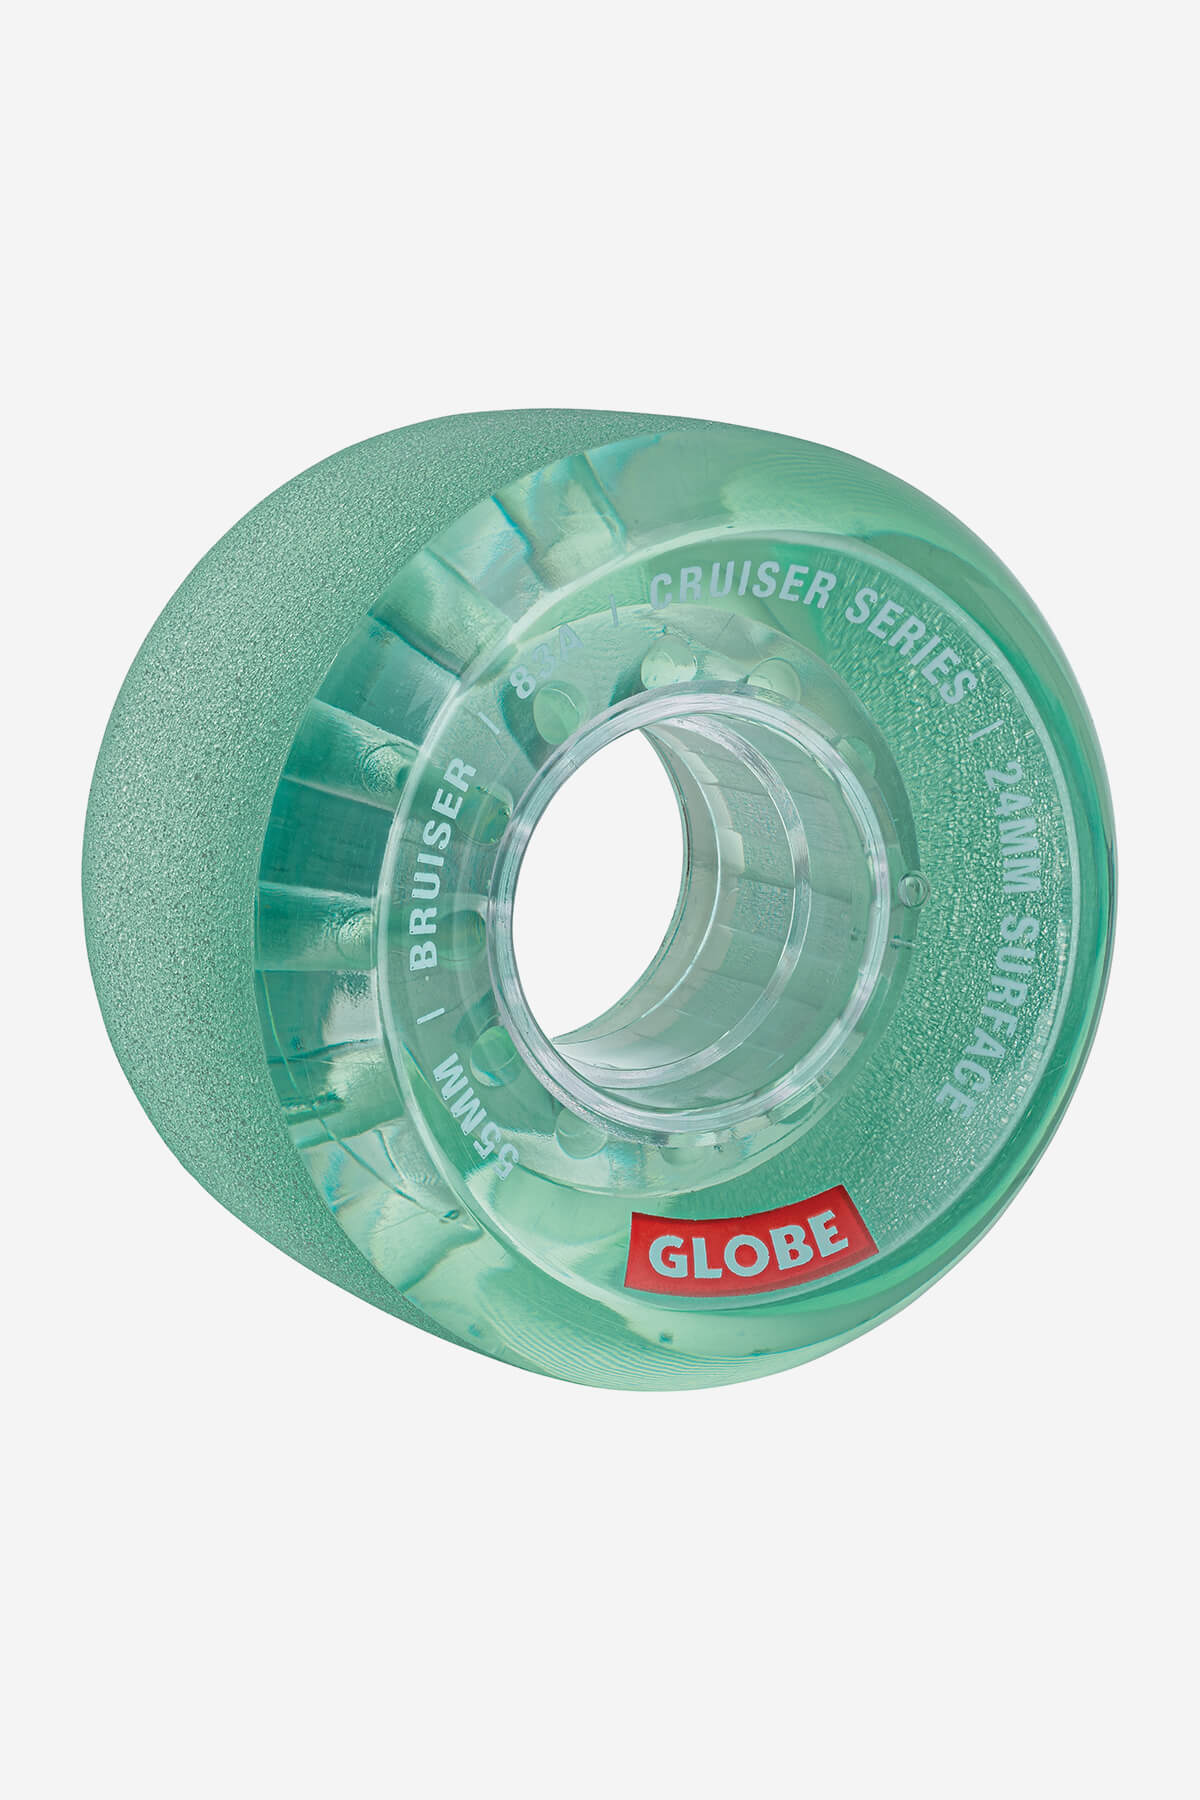 Globe Rollen Bruiser Cruiser Skateboard  Wheel  55mm in Clear Aqua